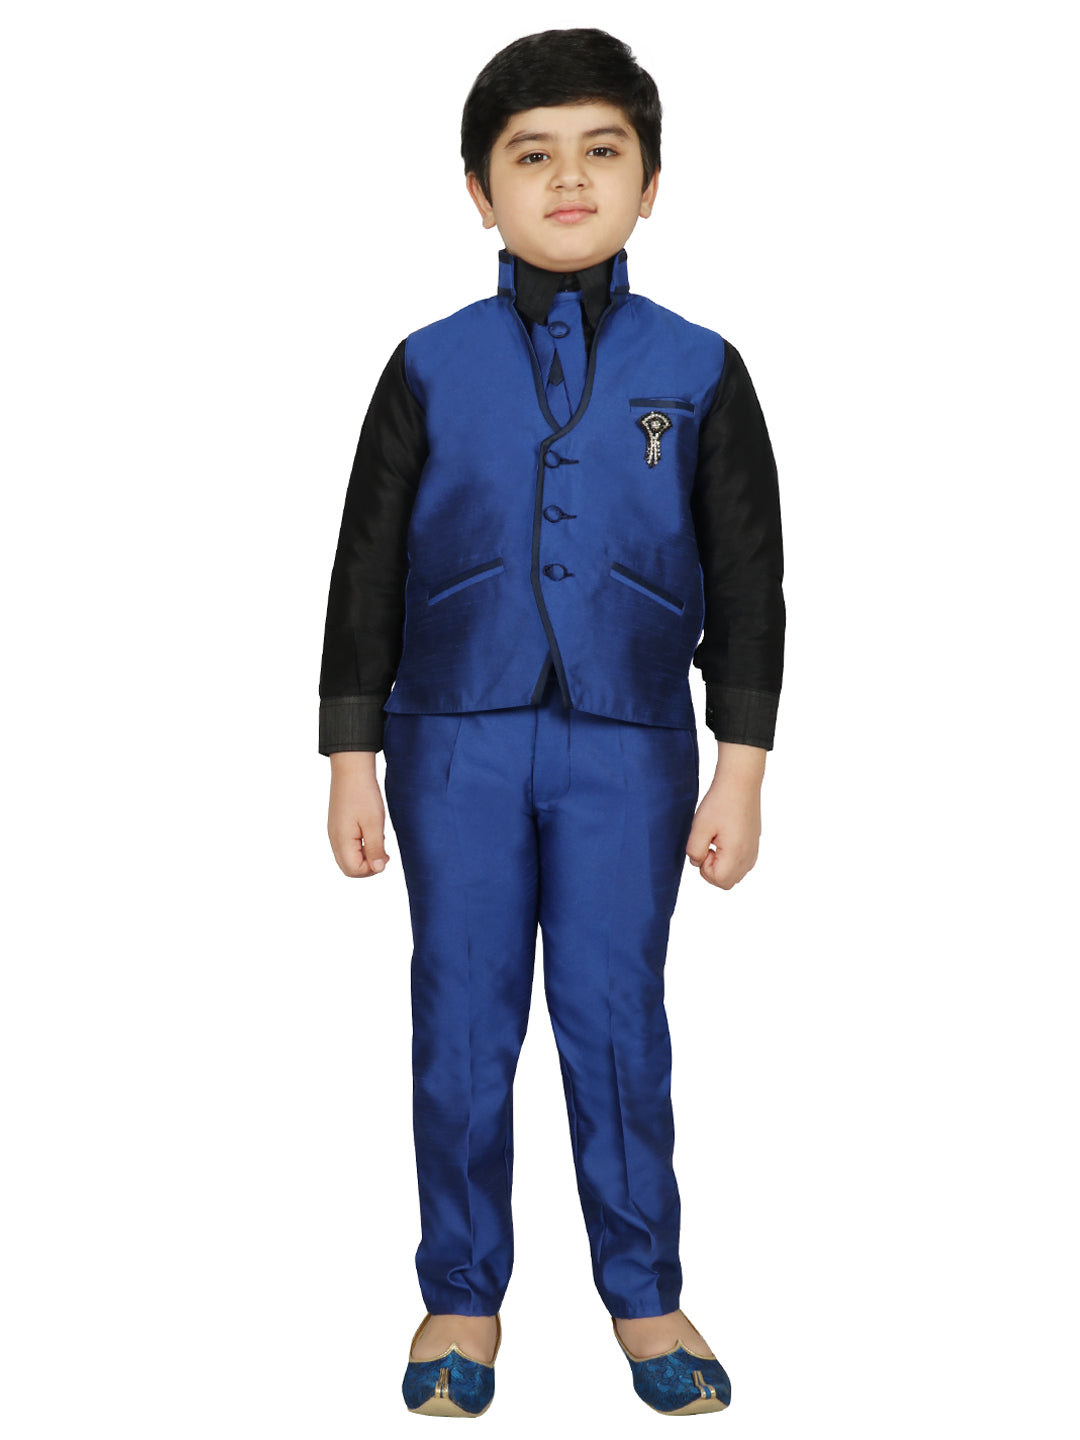 SG YUVRAJ Suits & Sets For Boys (J-105)